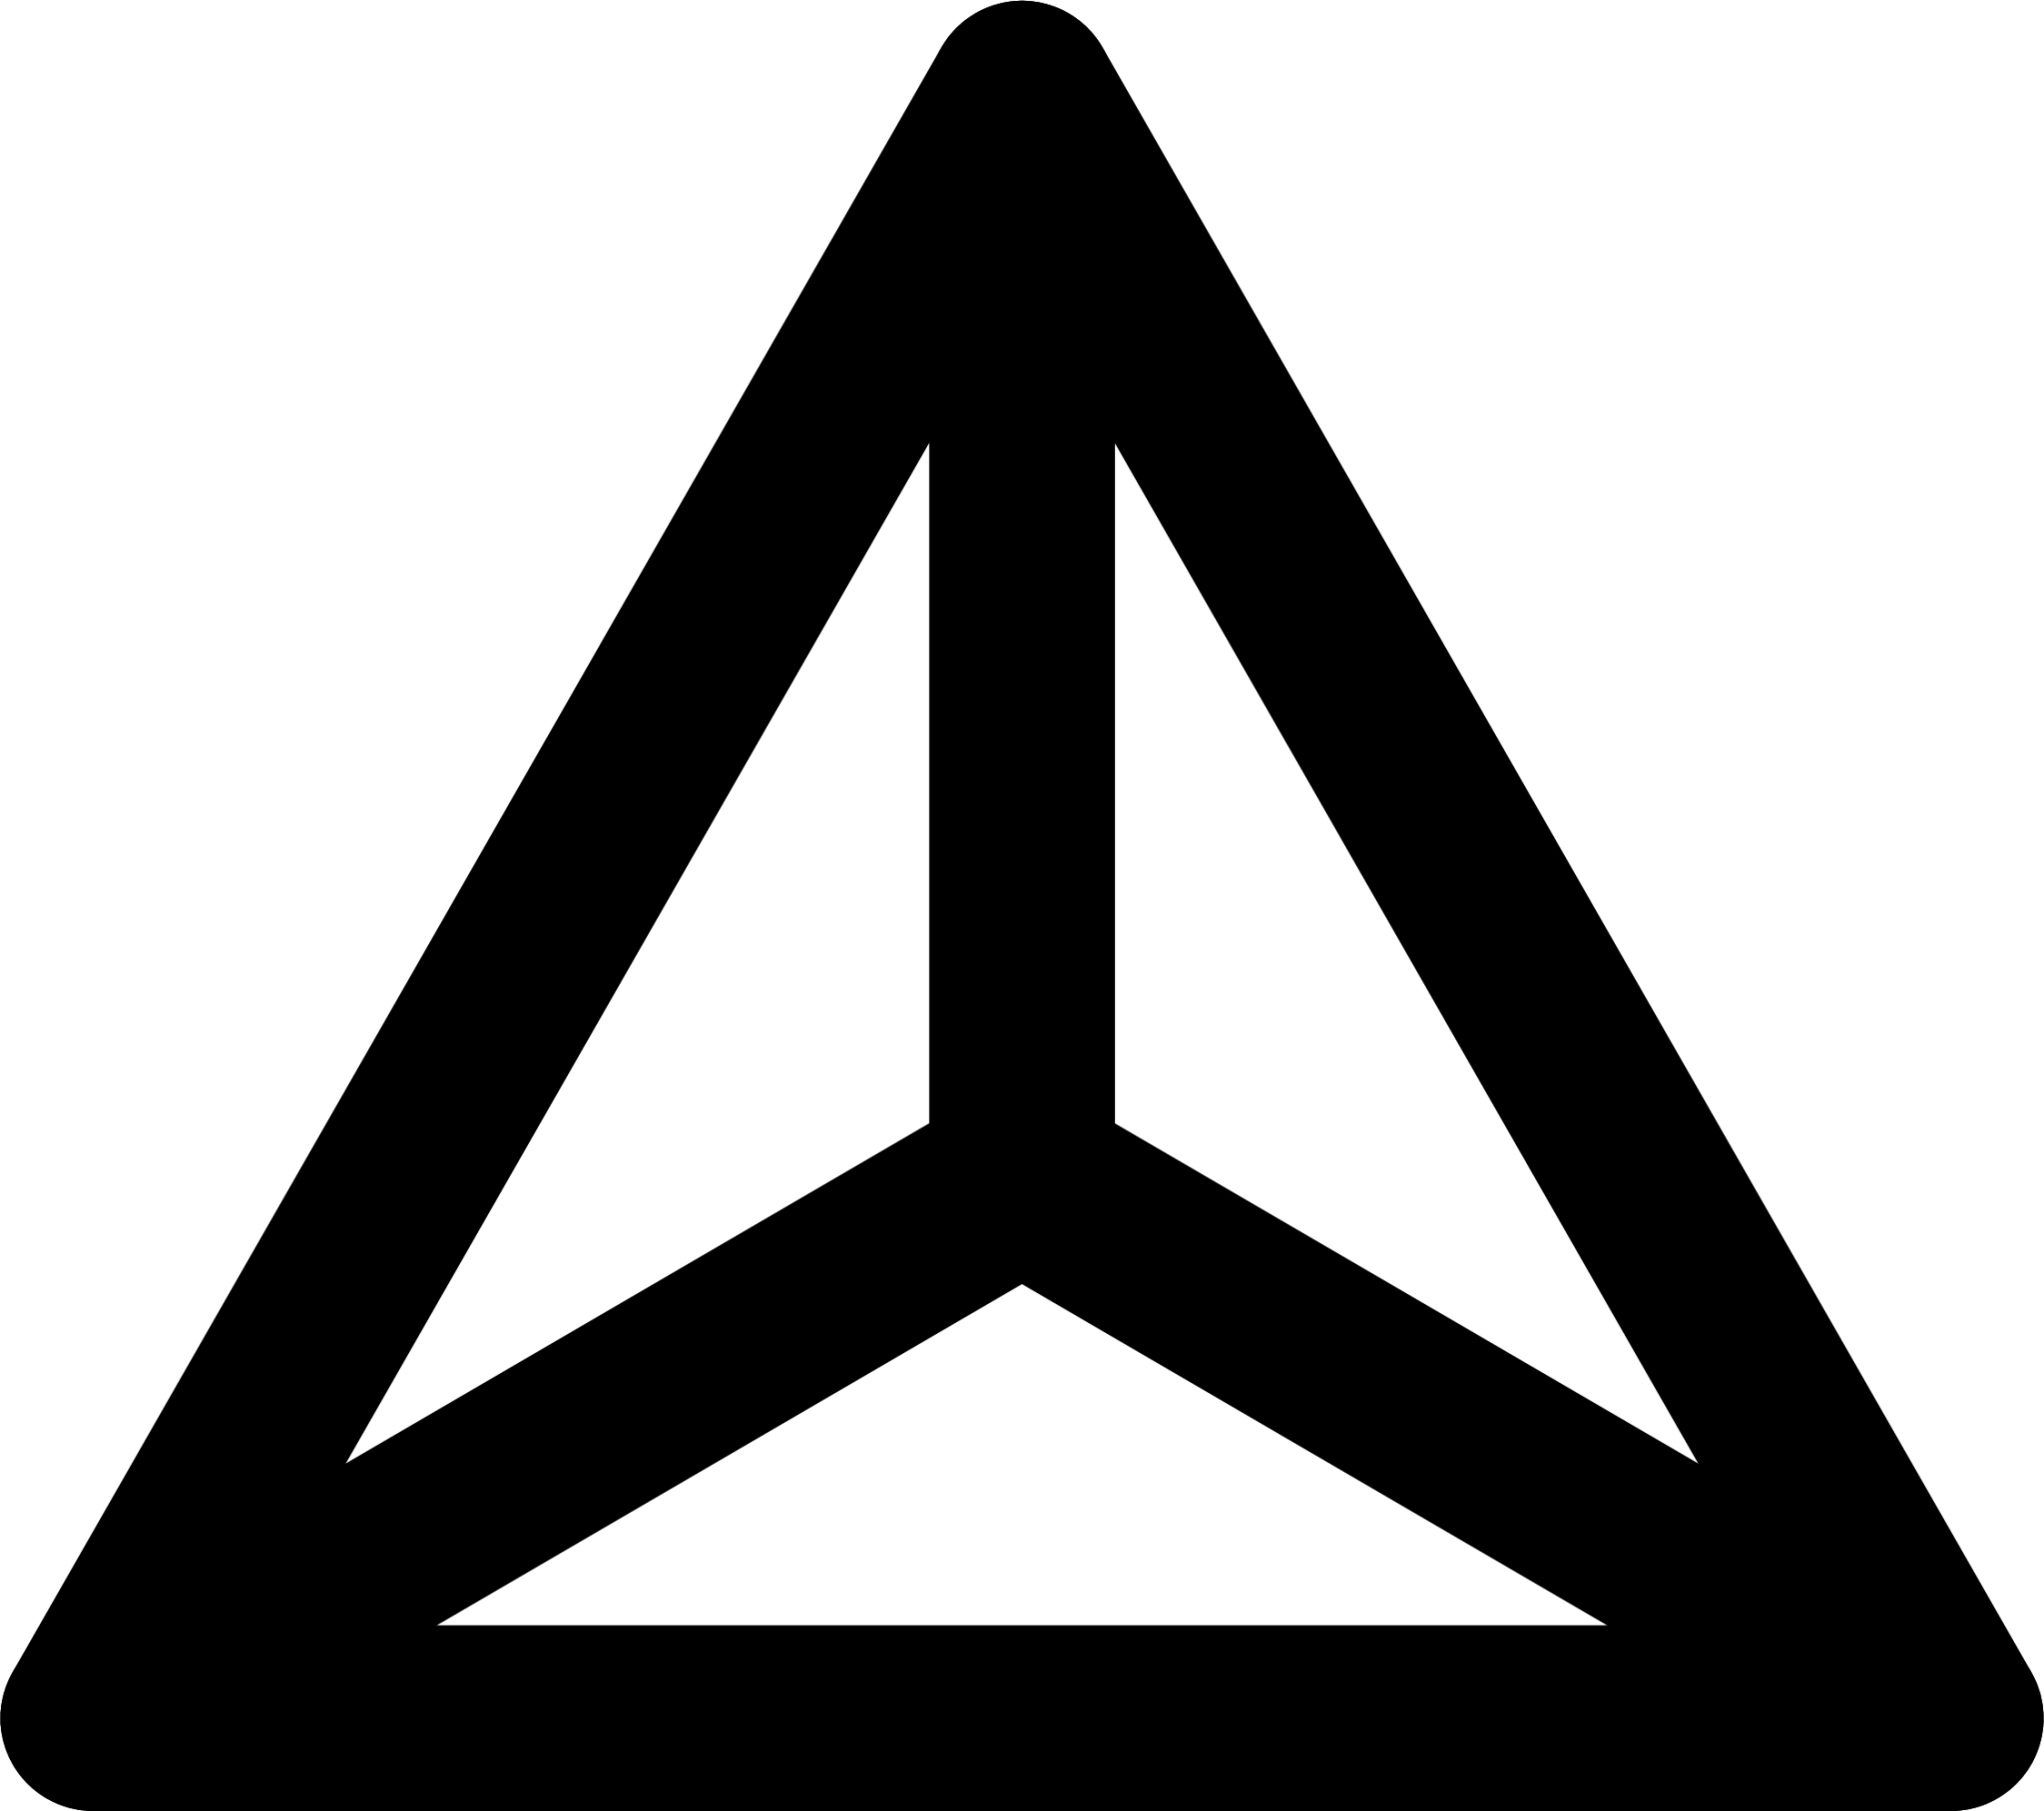 multi triangular three icon